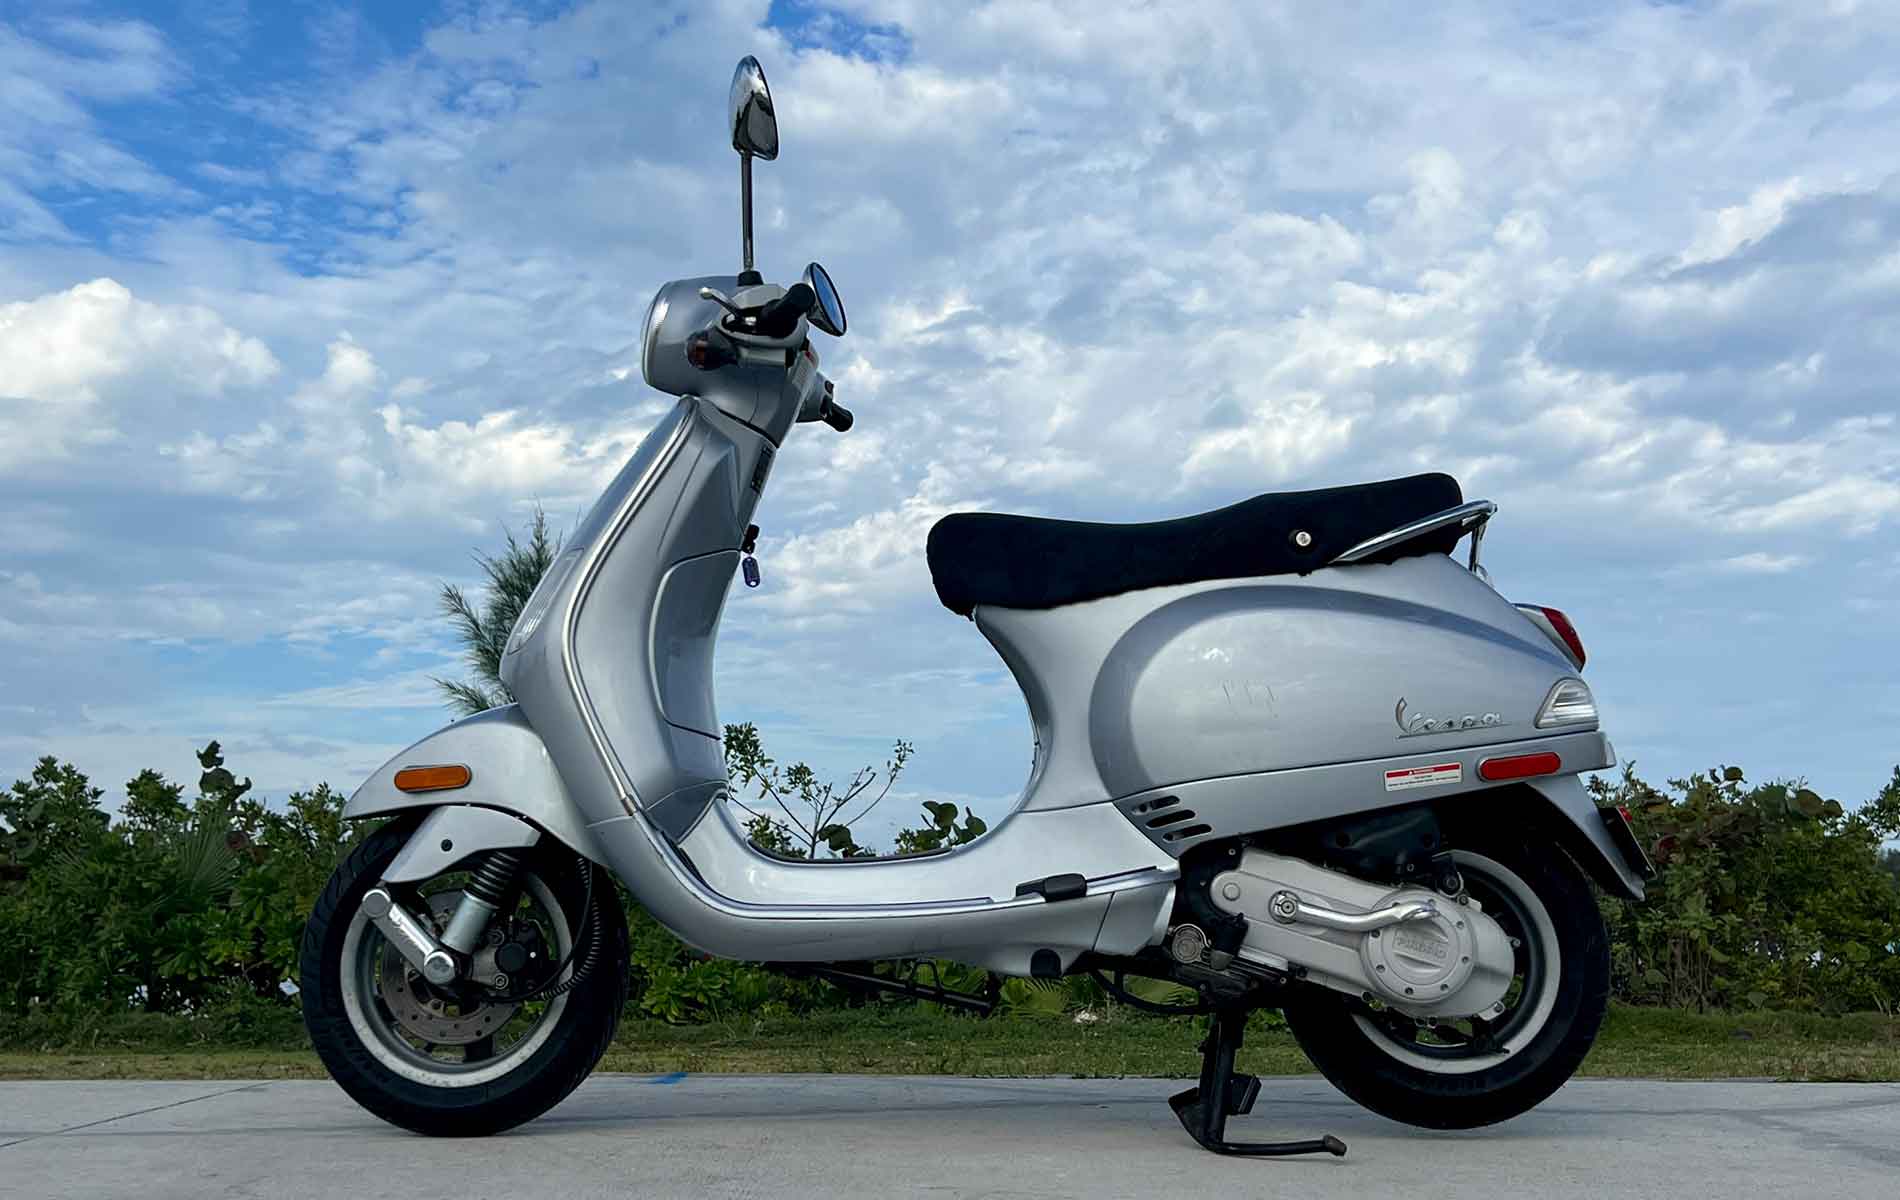 rent-a-vespa-lx-50cc-motorcycle-silverfront-left-side